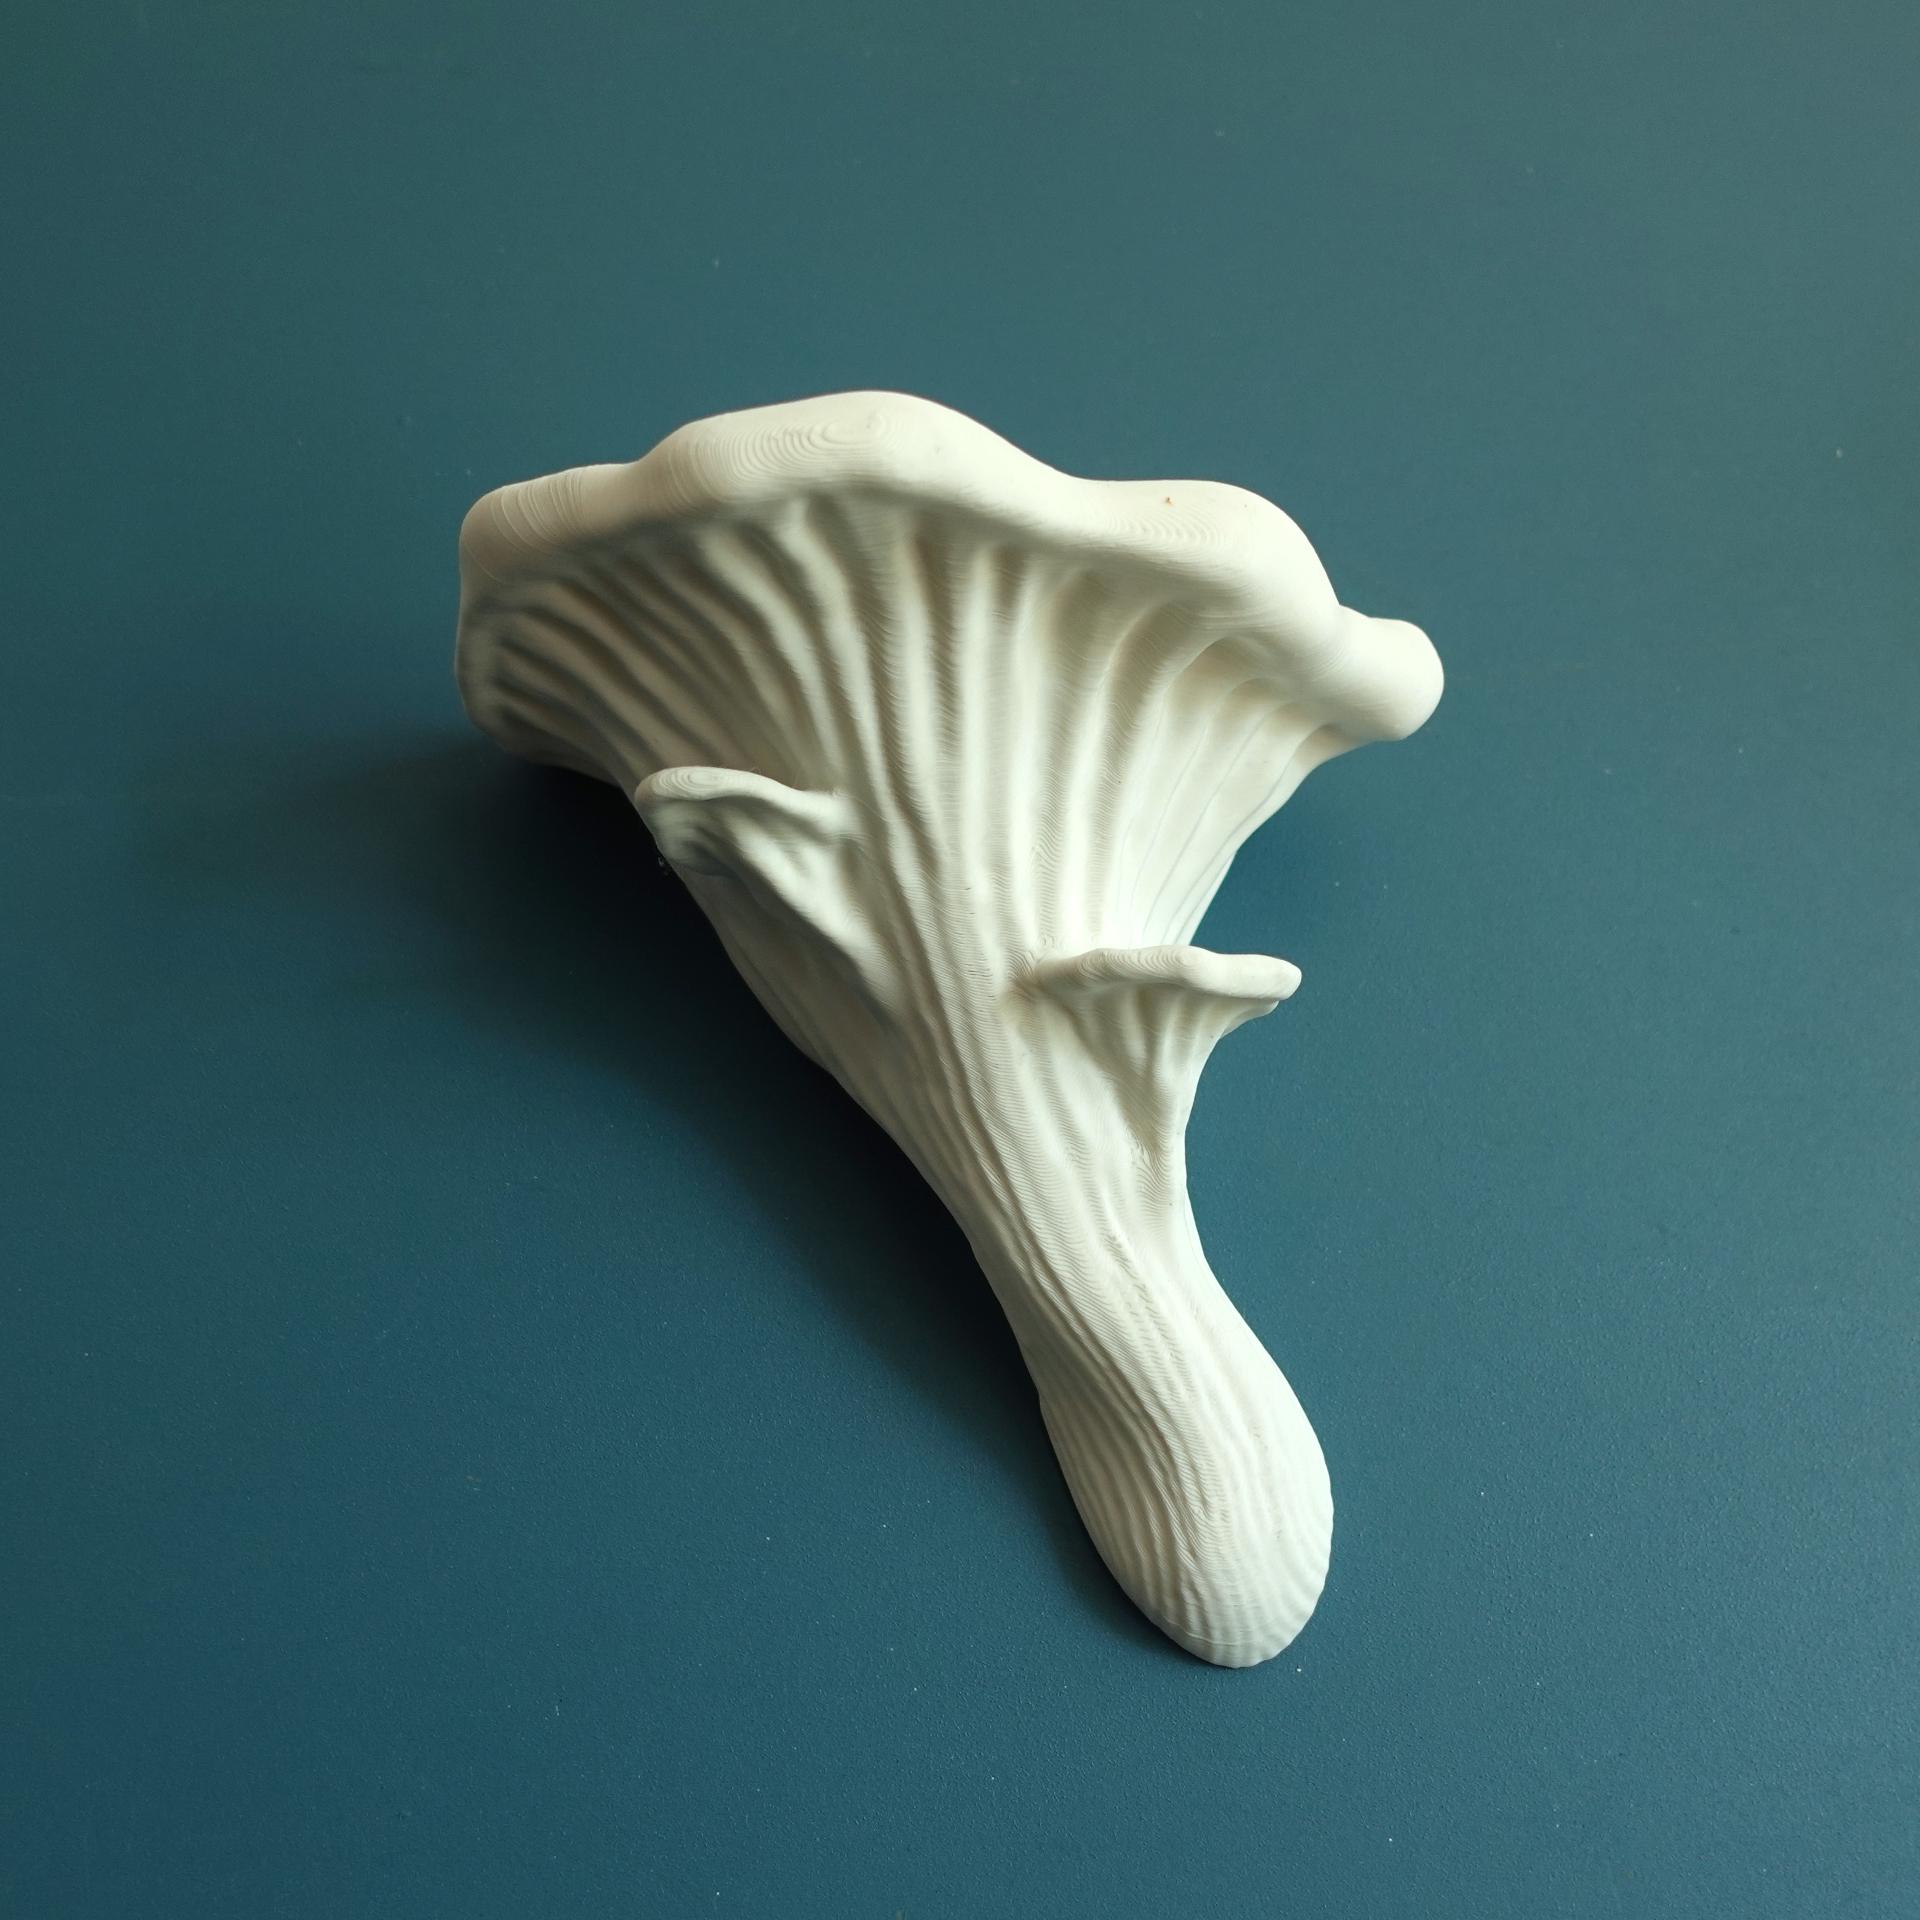 Mushroom shelf “Oyster” 3d model